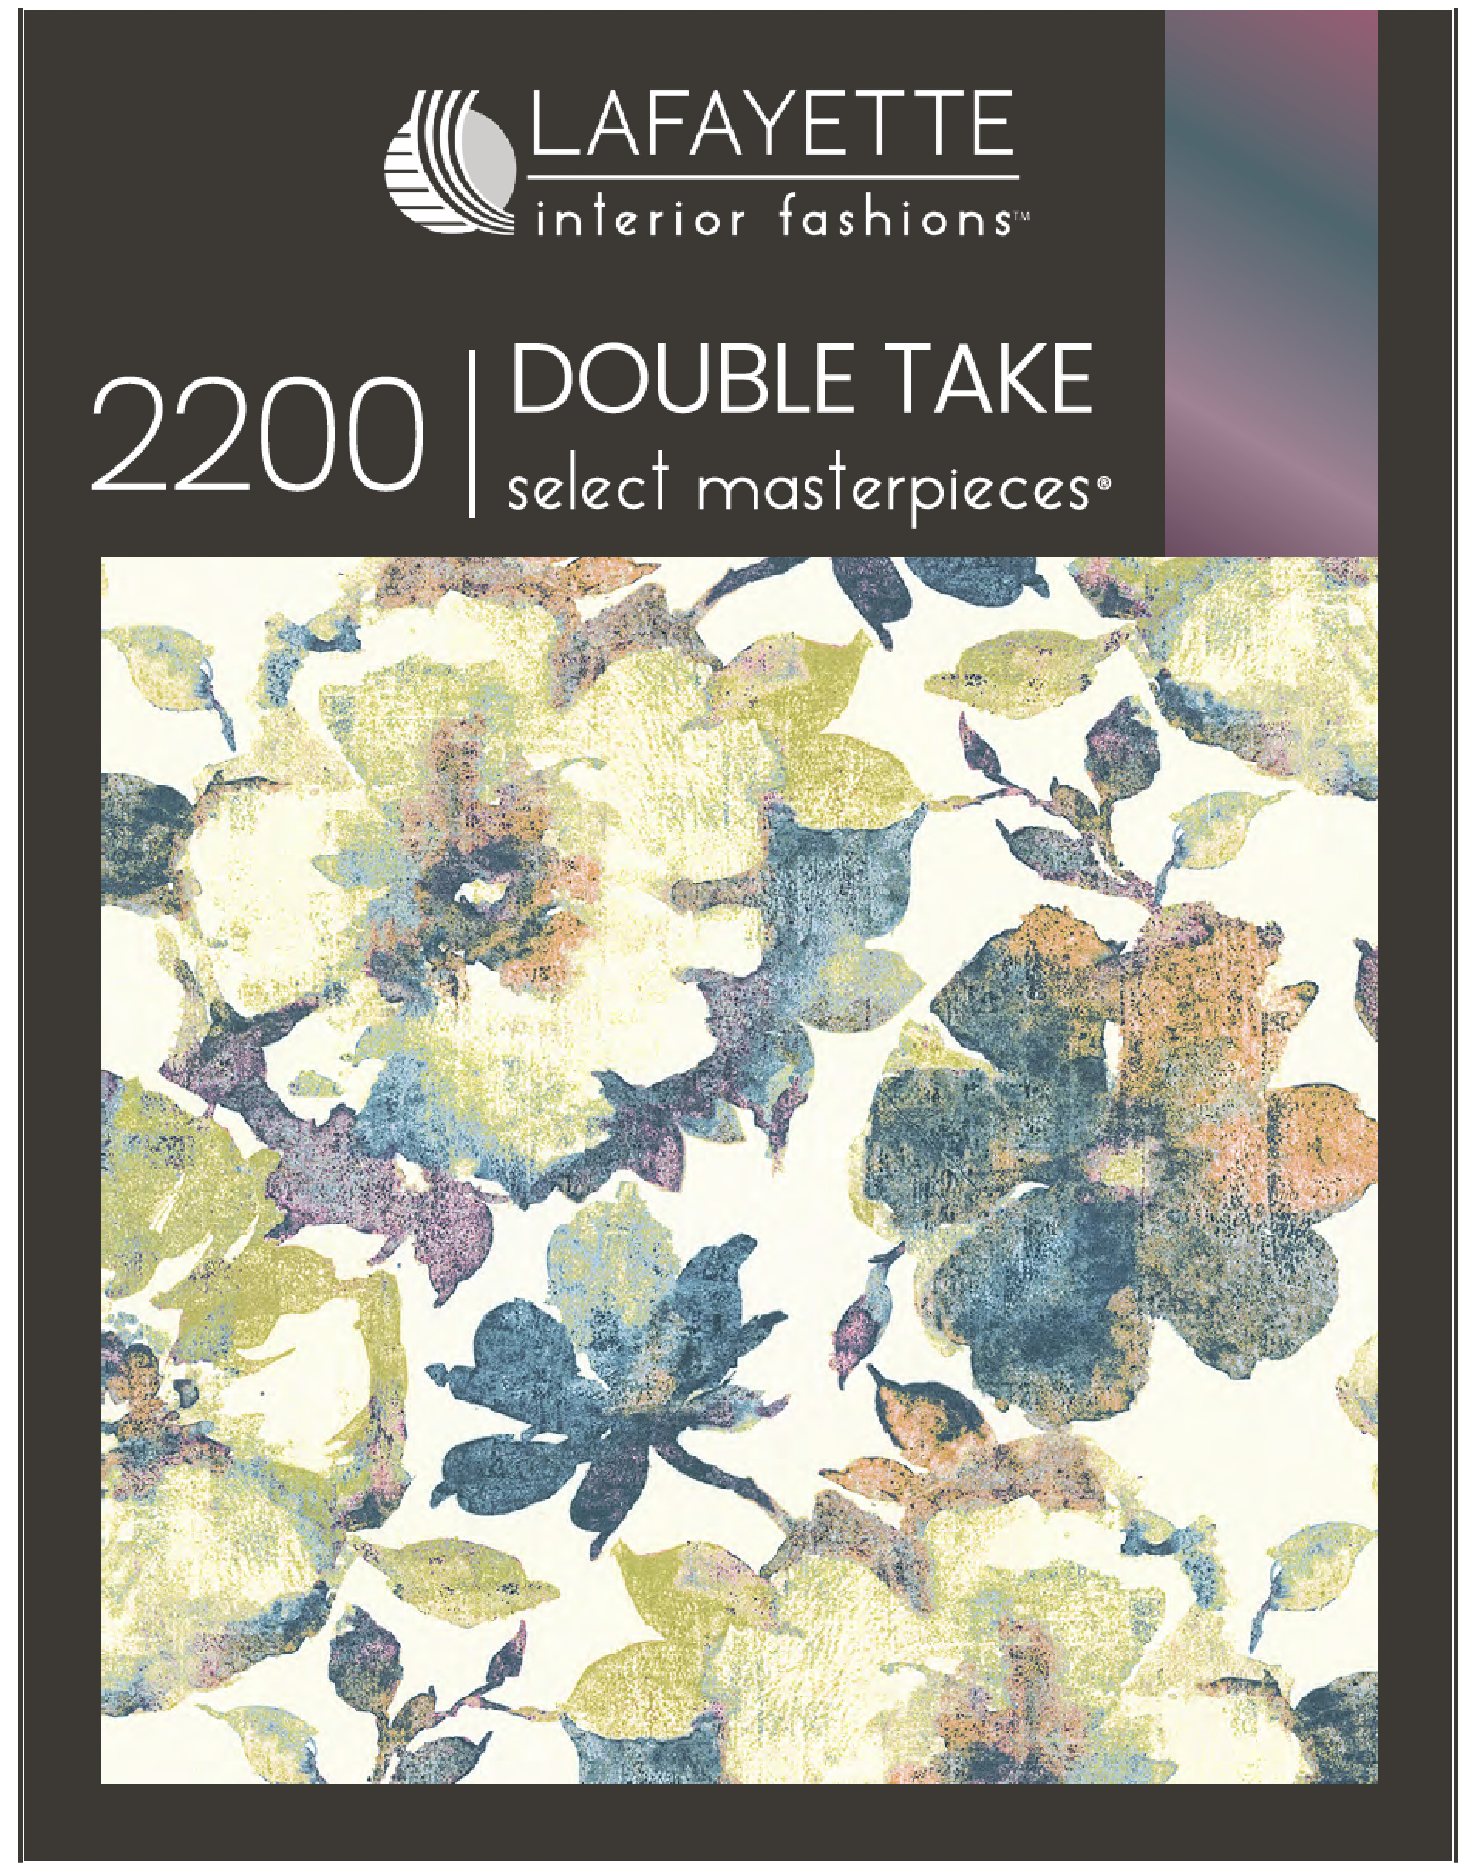 Double Take 2200